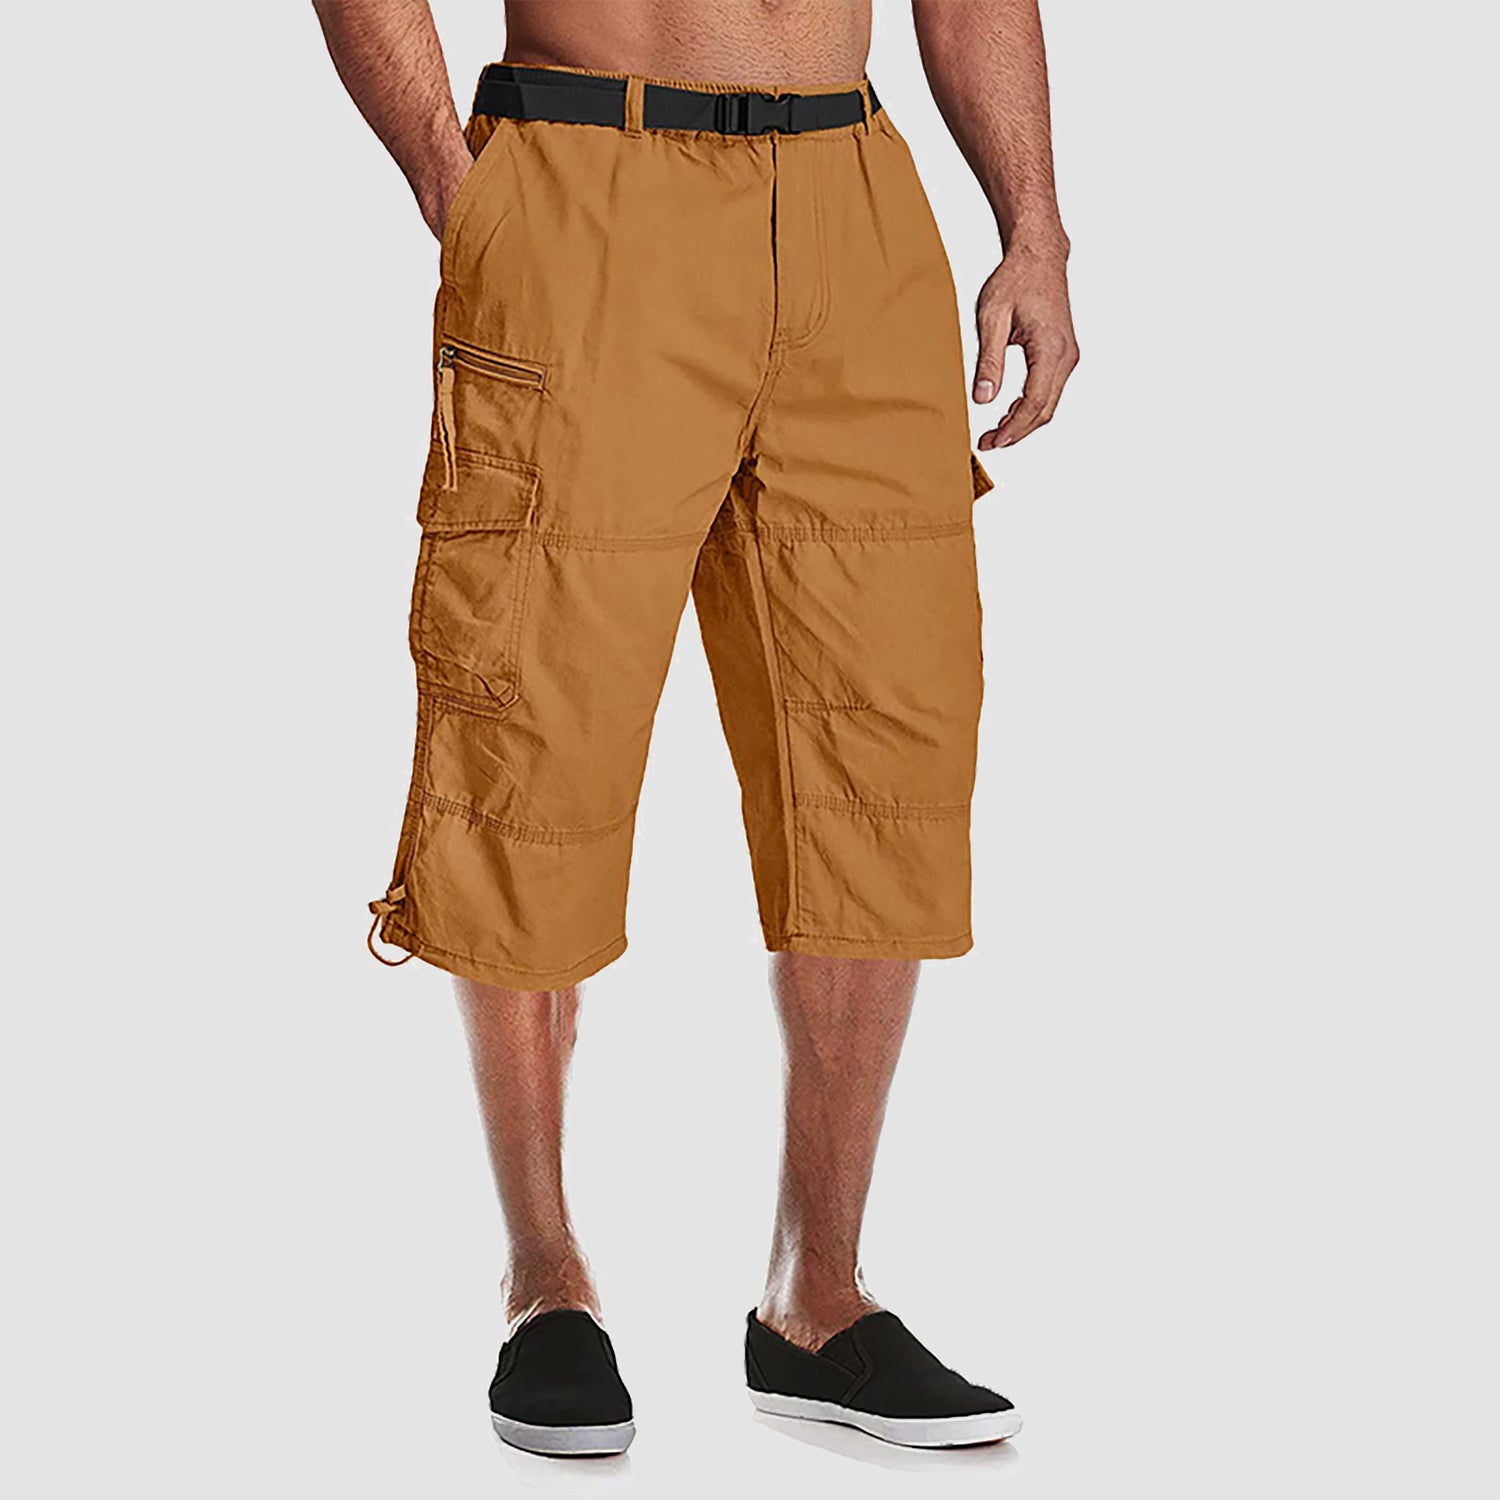 Mens 3/4 Length Capri Shorts Outdoor Hiking Cargo Work Pants Casual Summer  Wear